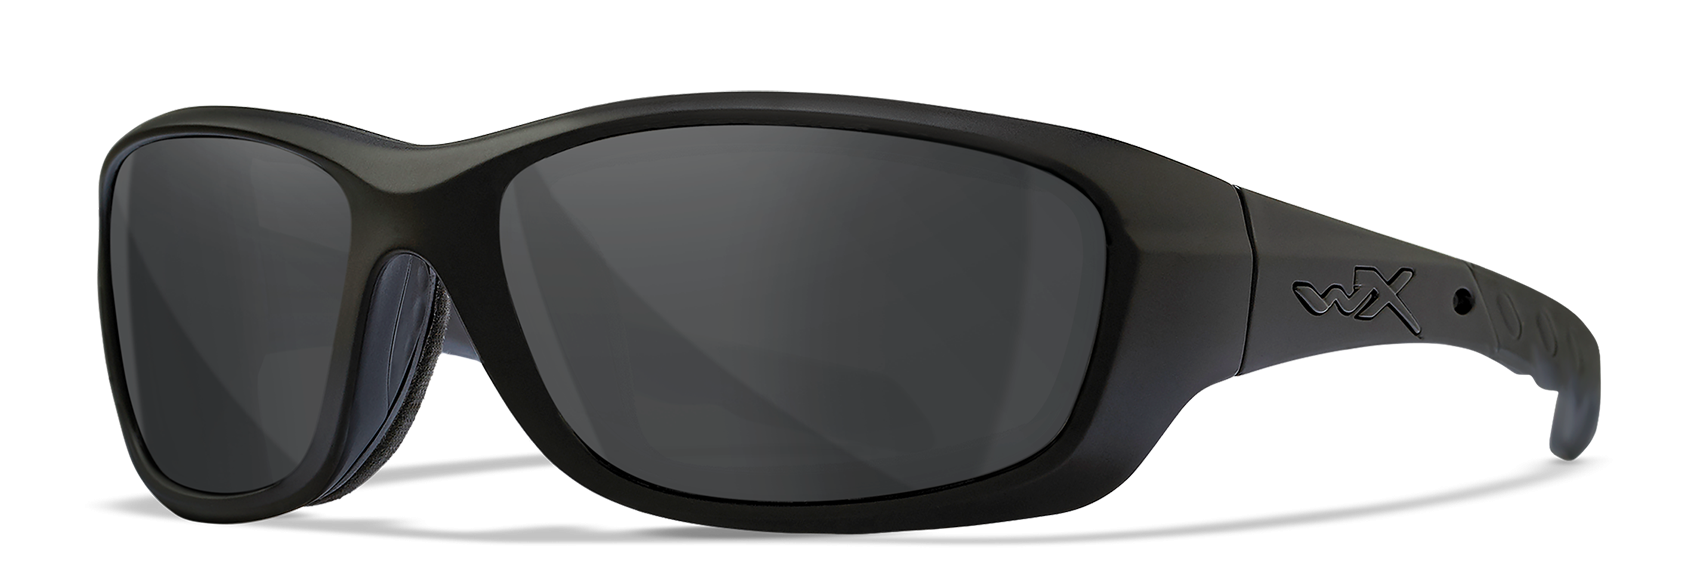 Wiley X WX Gravity Black Polycarbonate Sunglasses